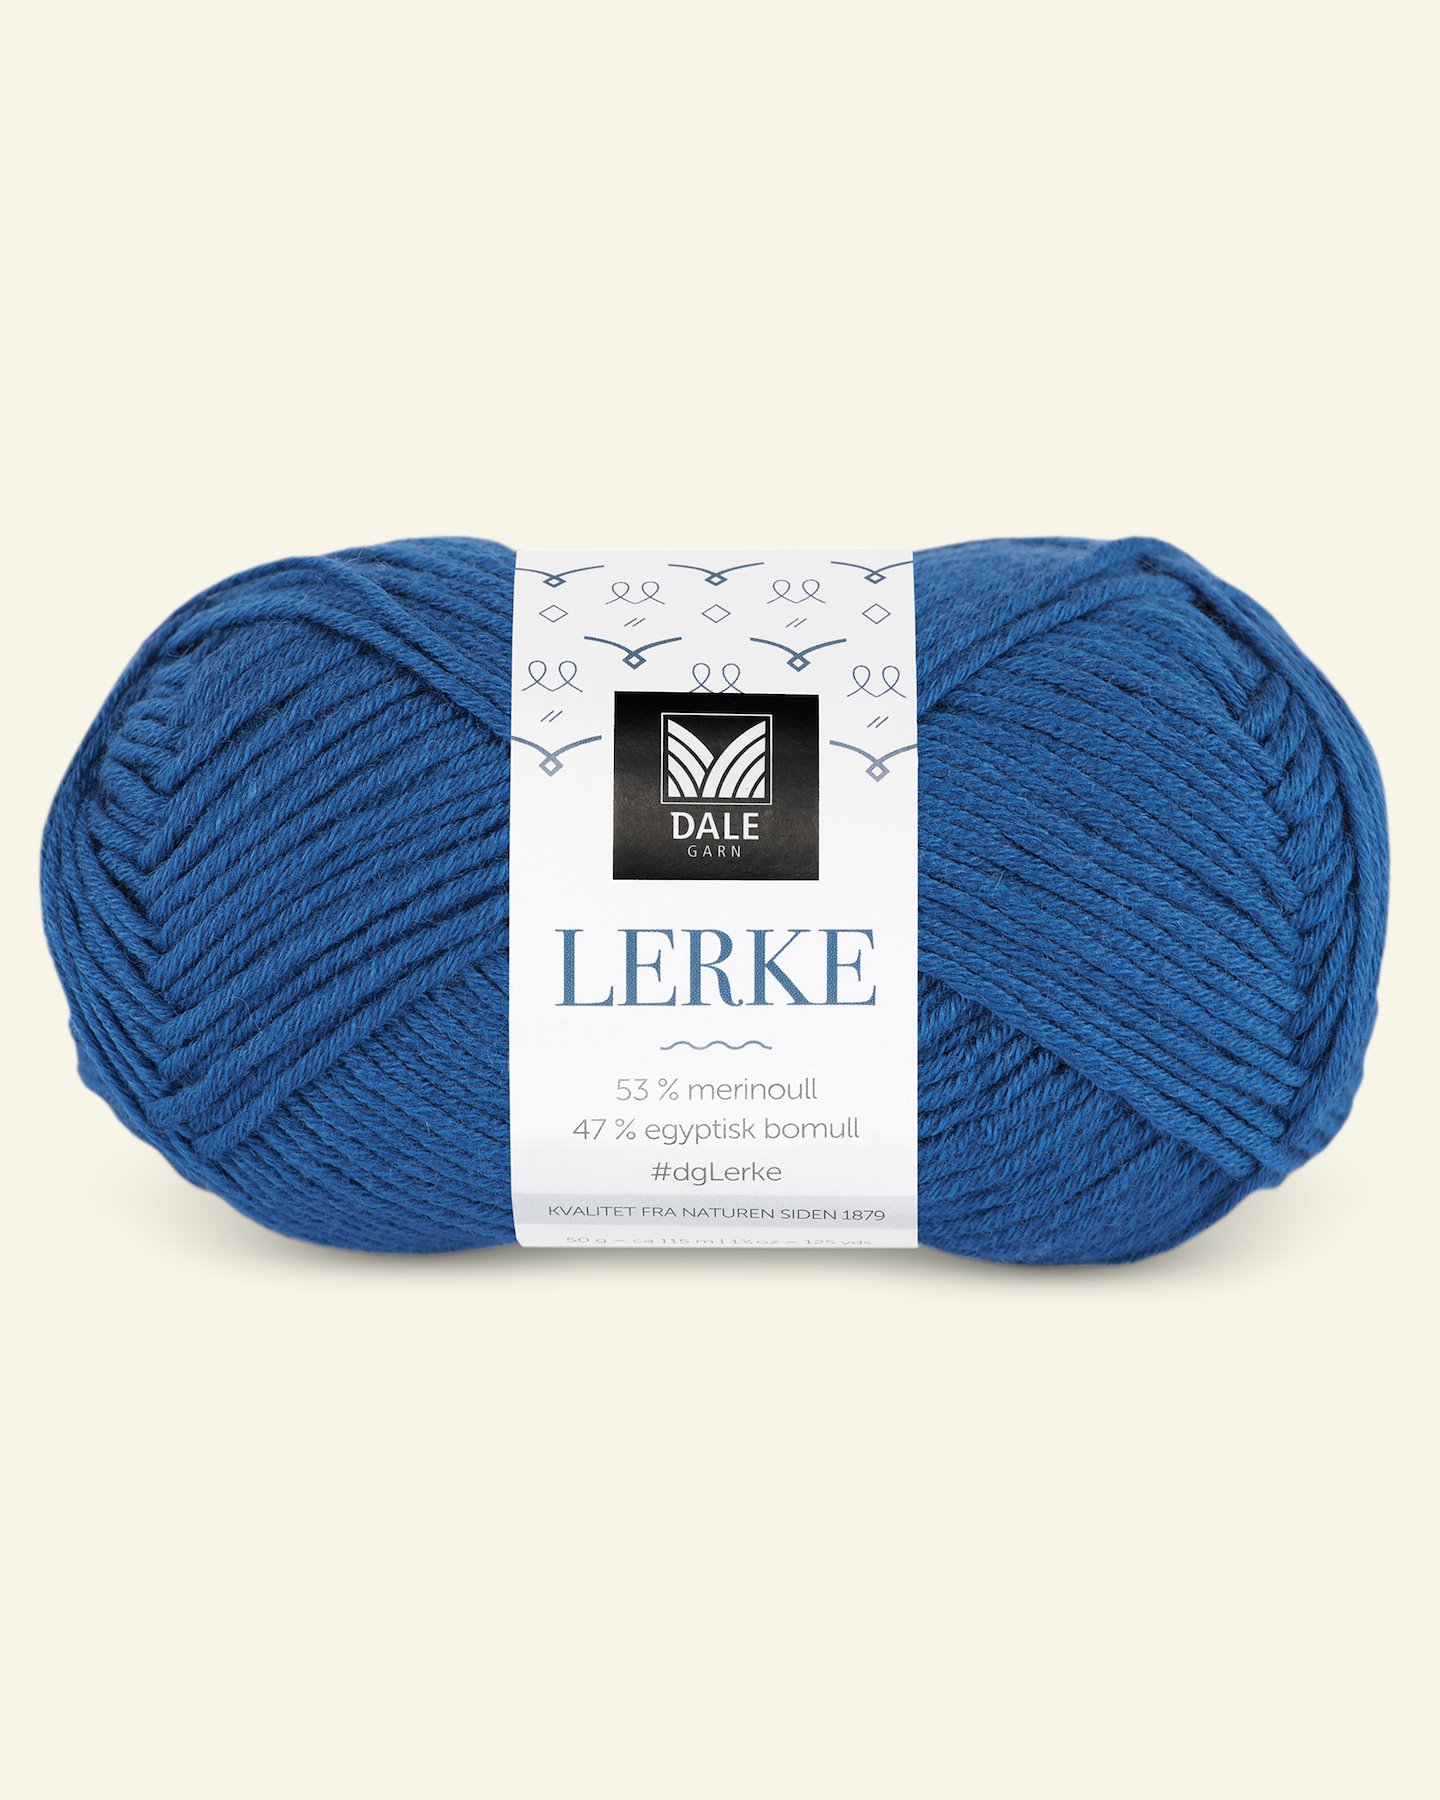 Dale Garn, merino cotton yarn "Lerke", dark blue (5845) 90000842_pack